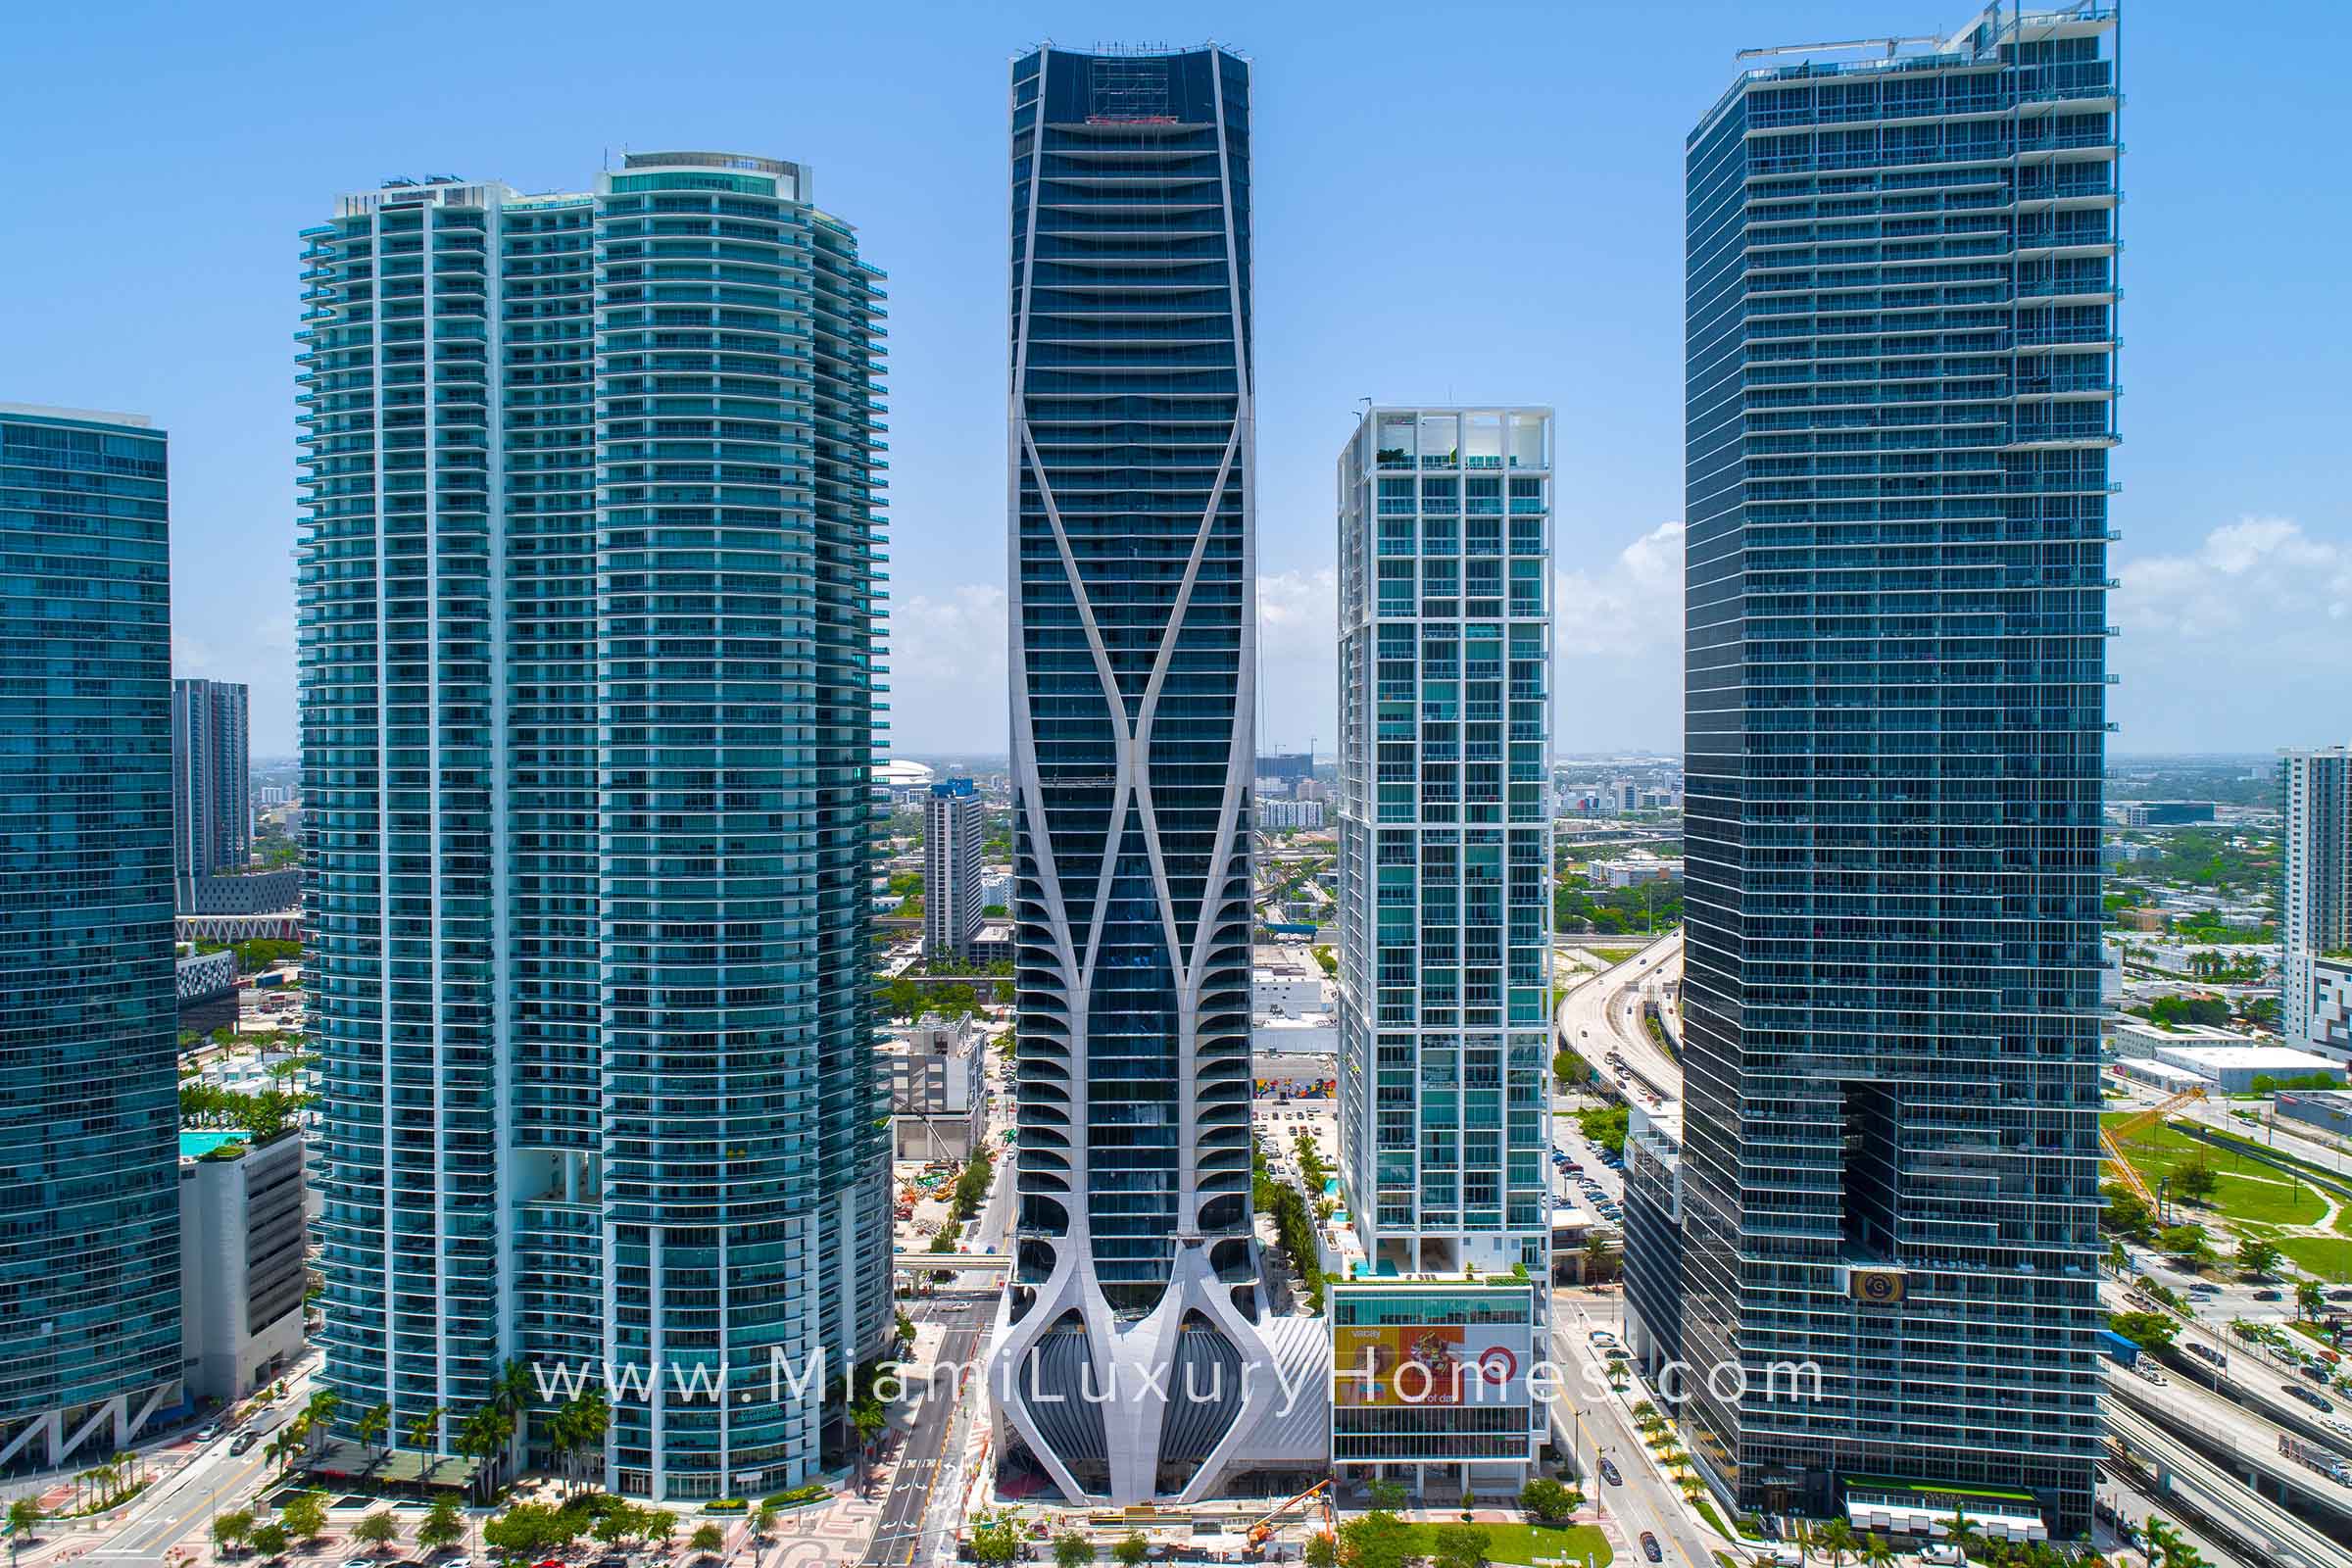 Miami Beach Parking Garage by Zaha Hadid